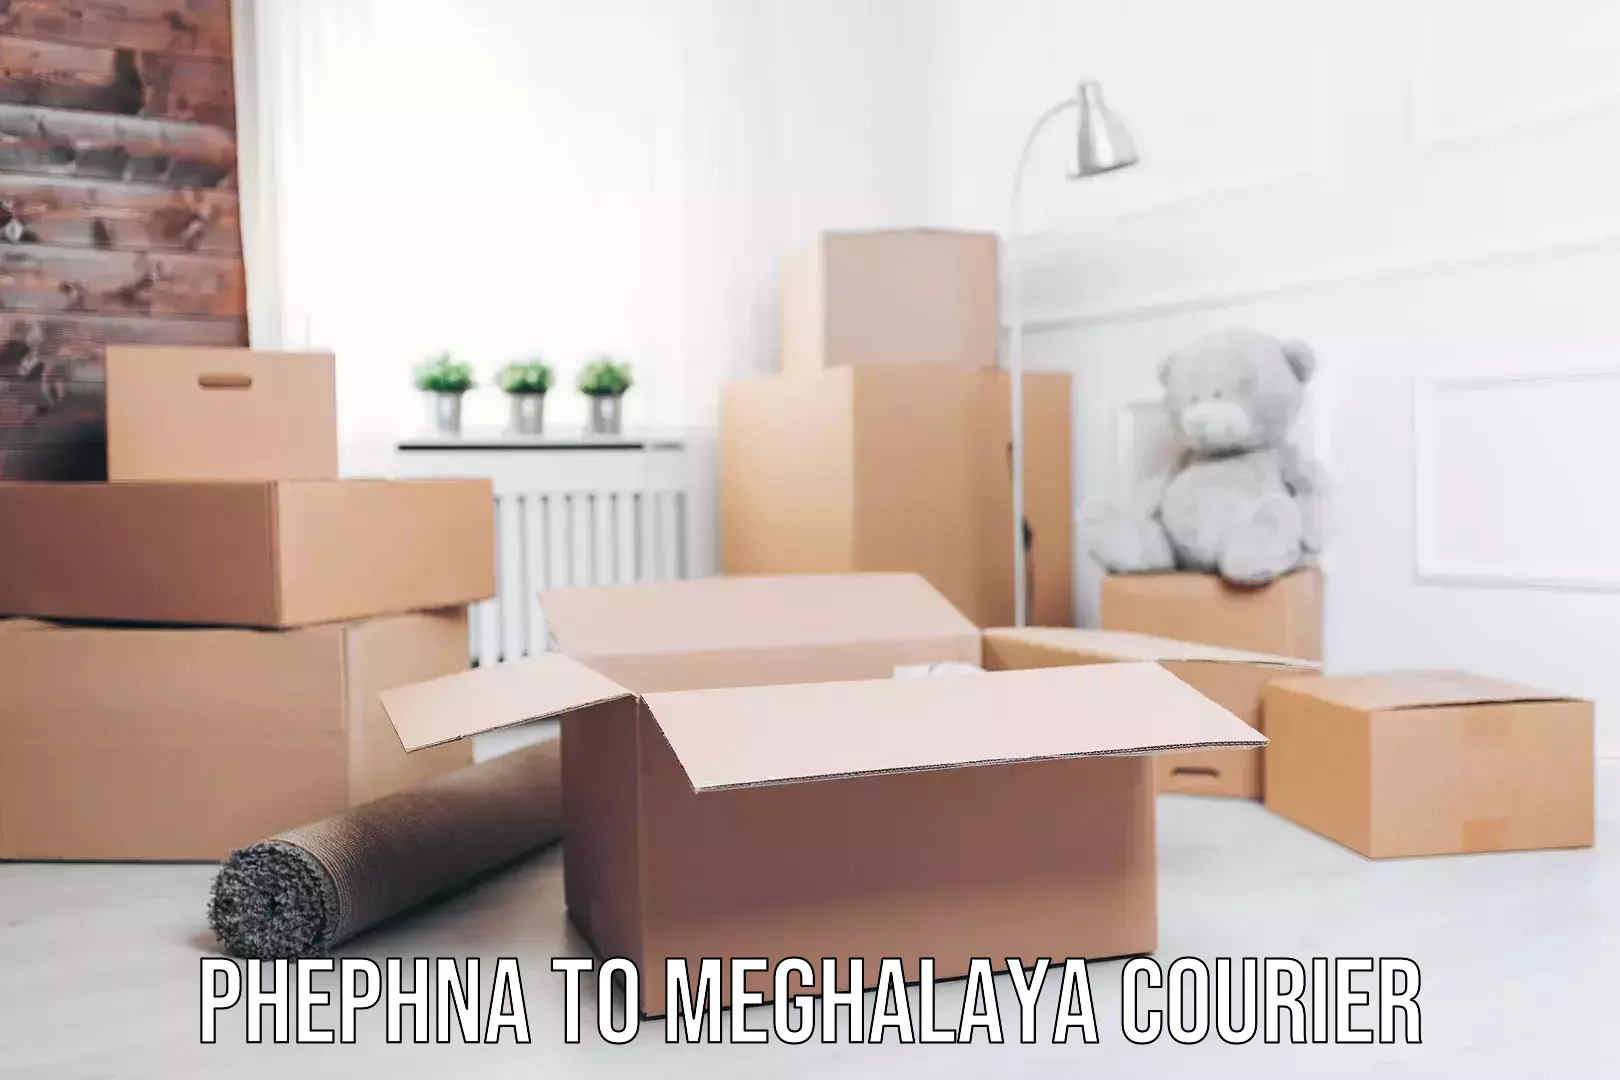 Home goods moving company Phephna to Meghalaya